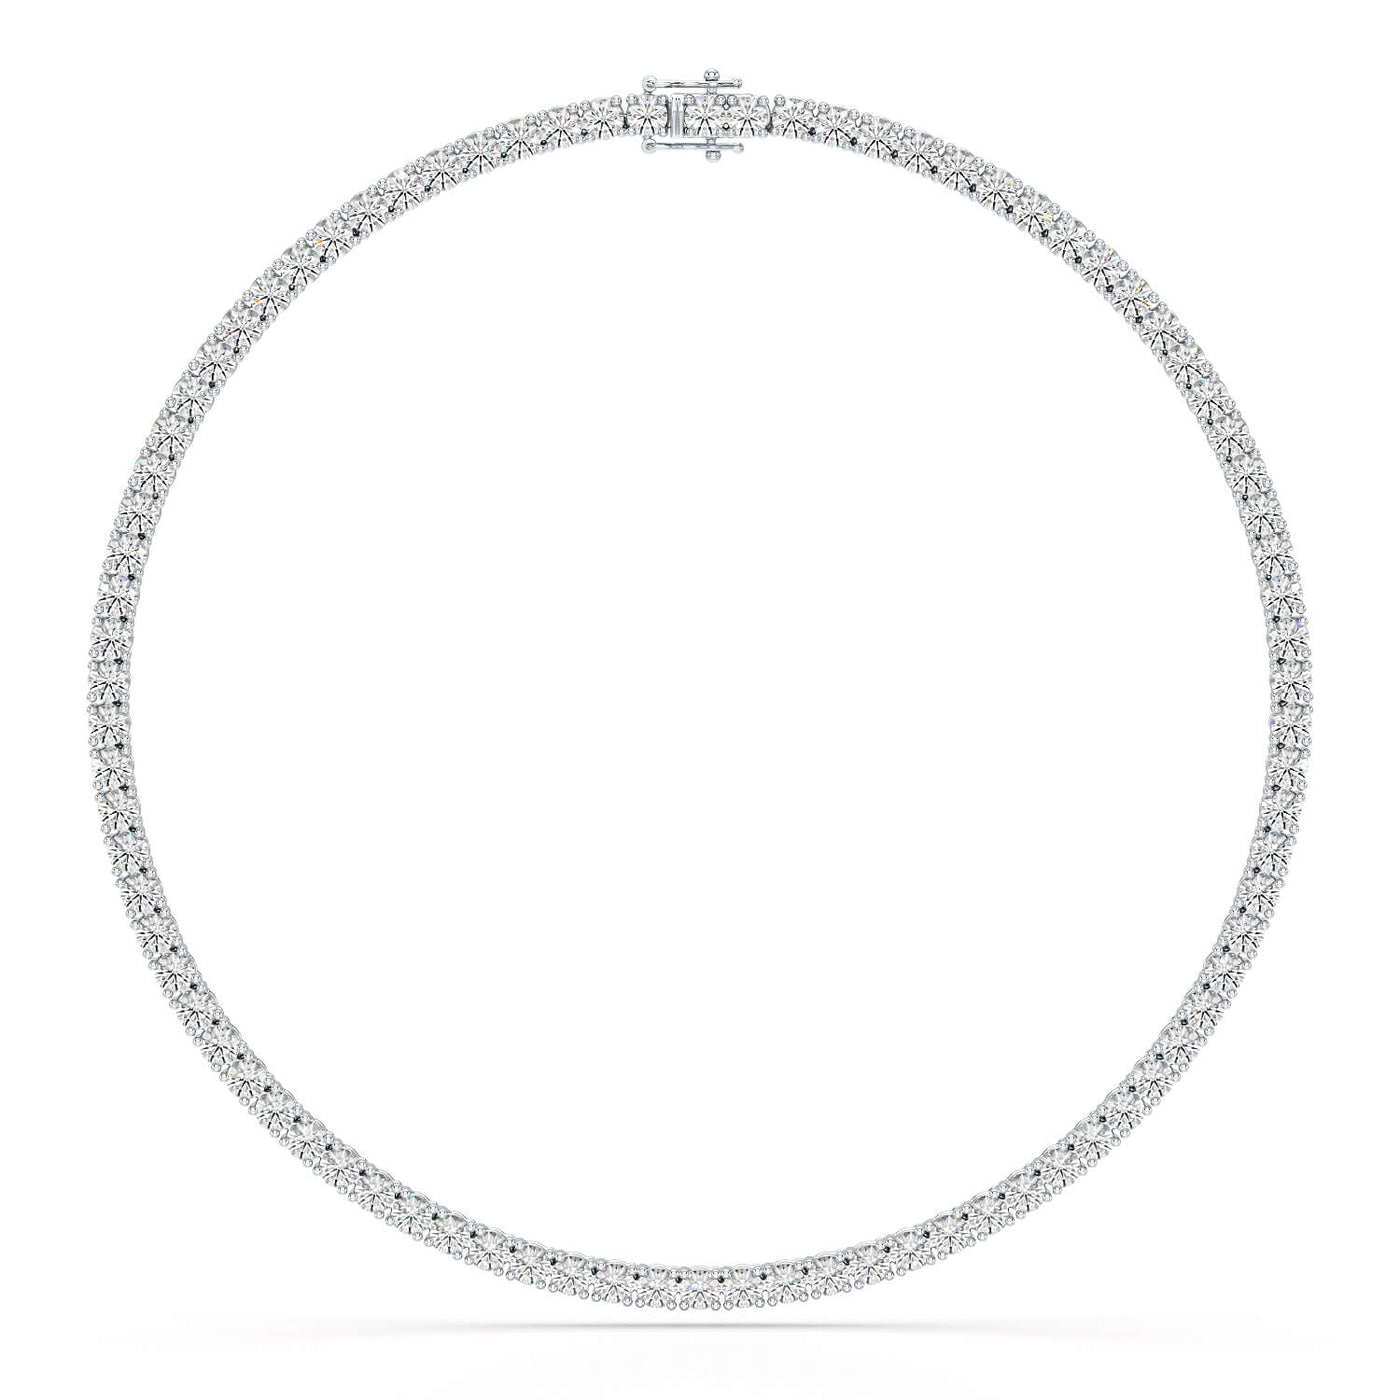 30.32 CT White Gold Diamond Riviere Necklace